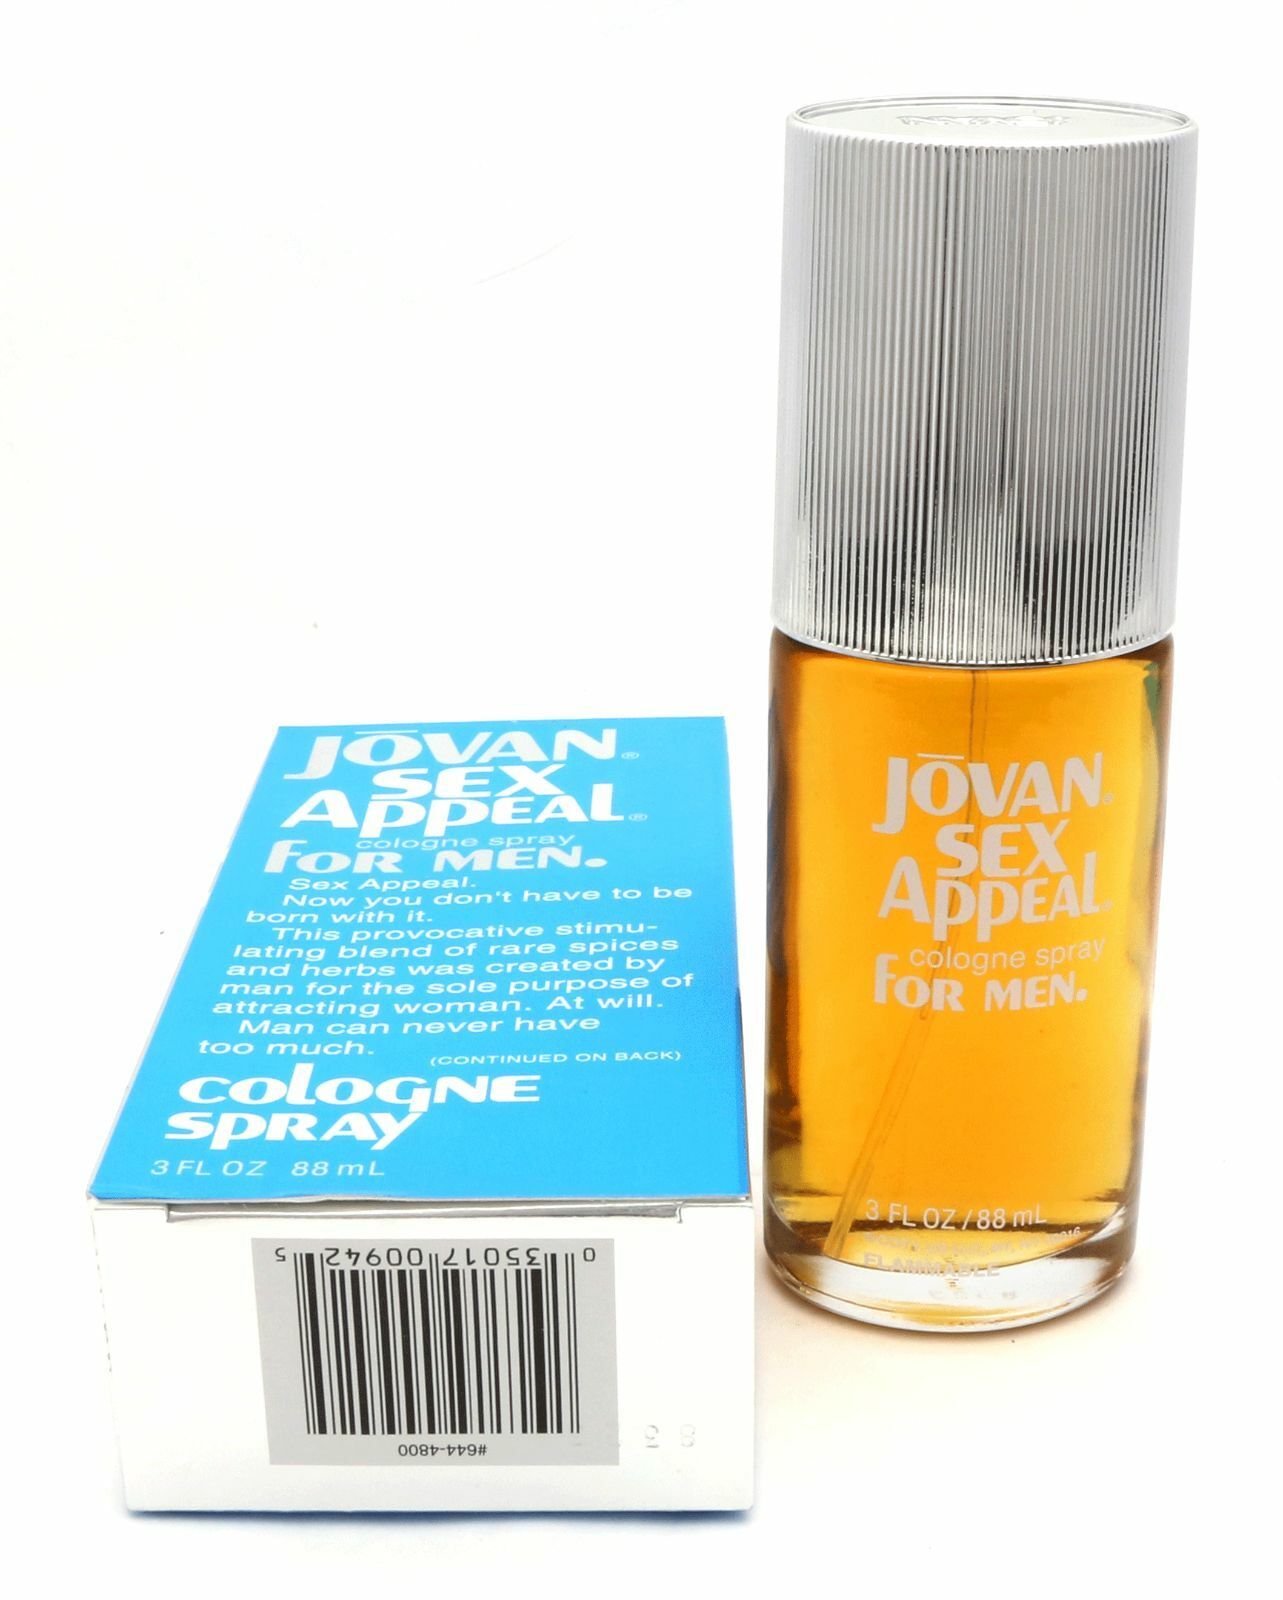 Classic Version Jovan Sex Appeal For Men Cologne Spray 3 Oz 88 Ml New In Box Men